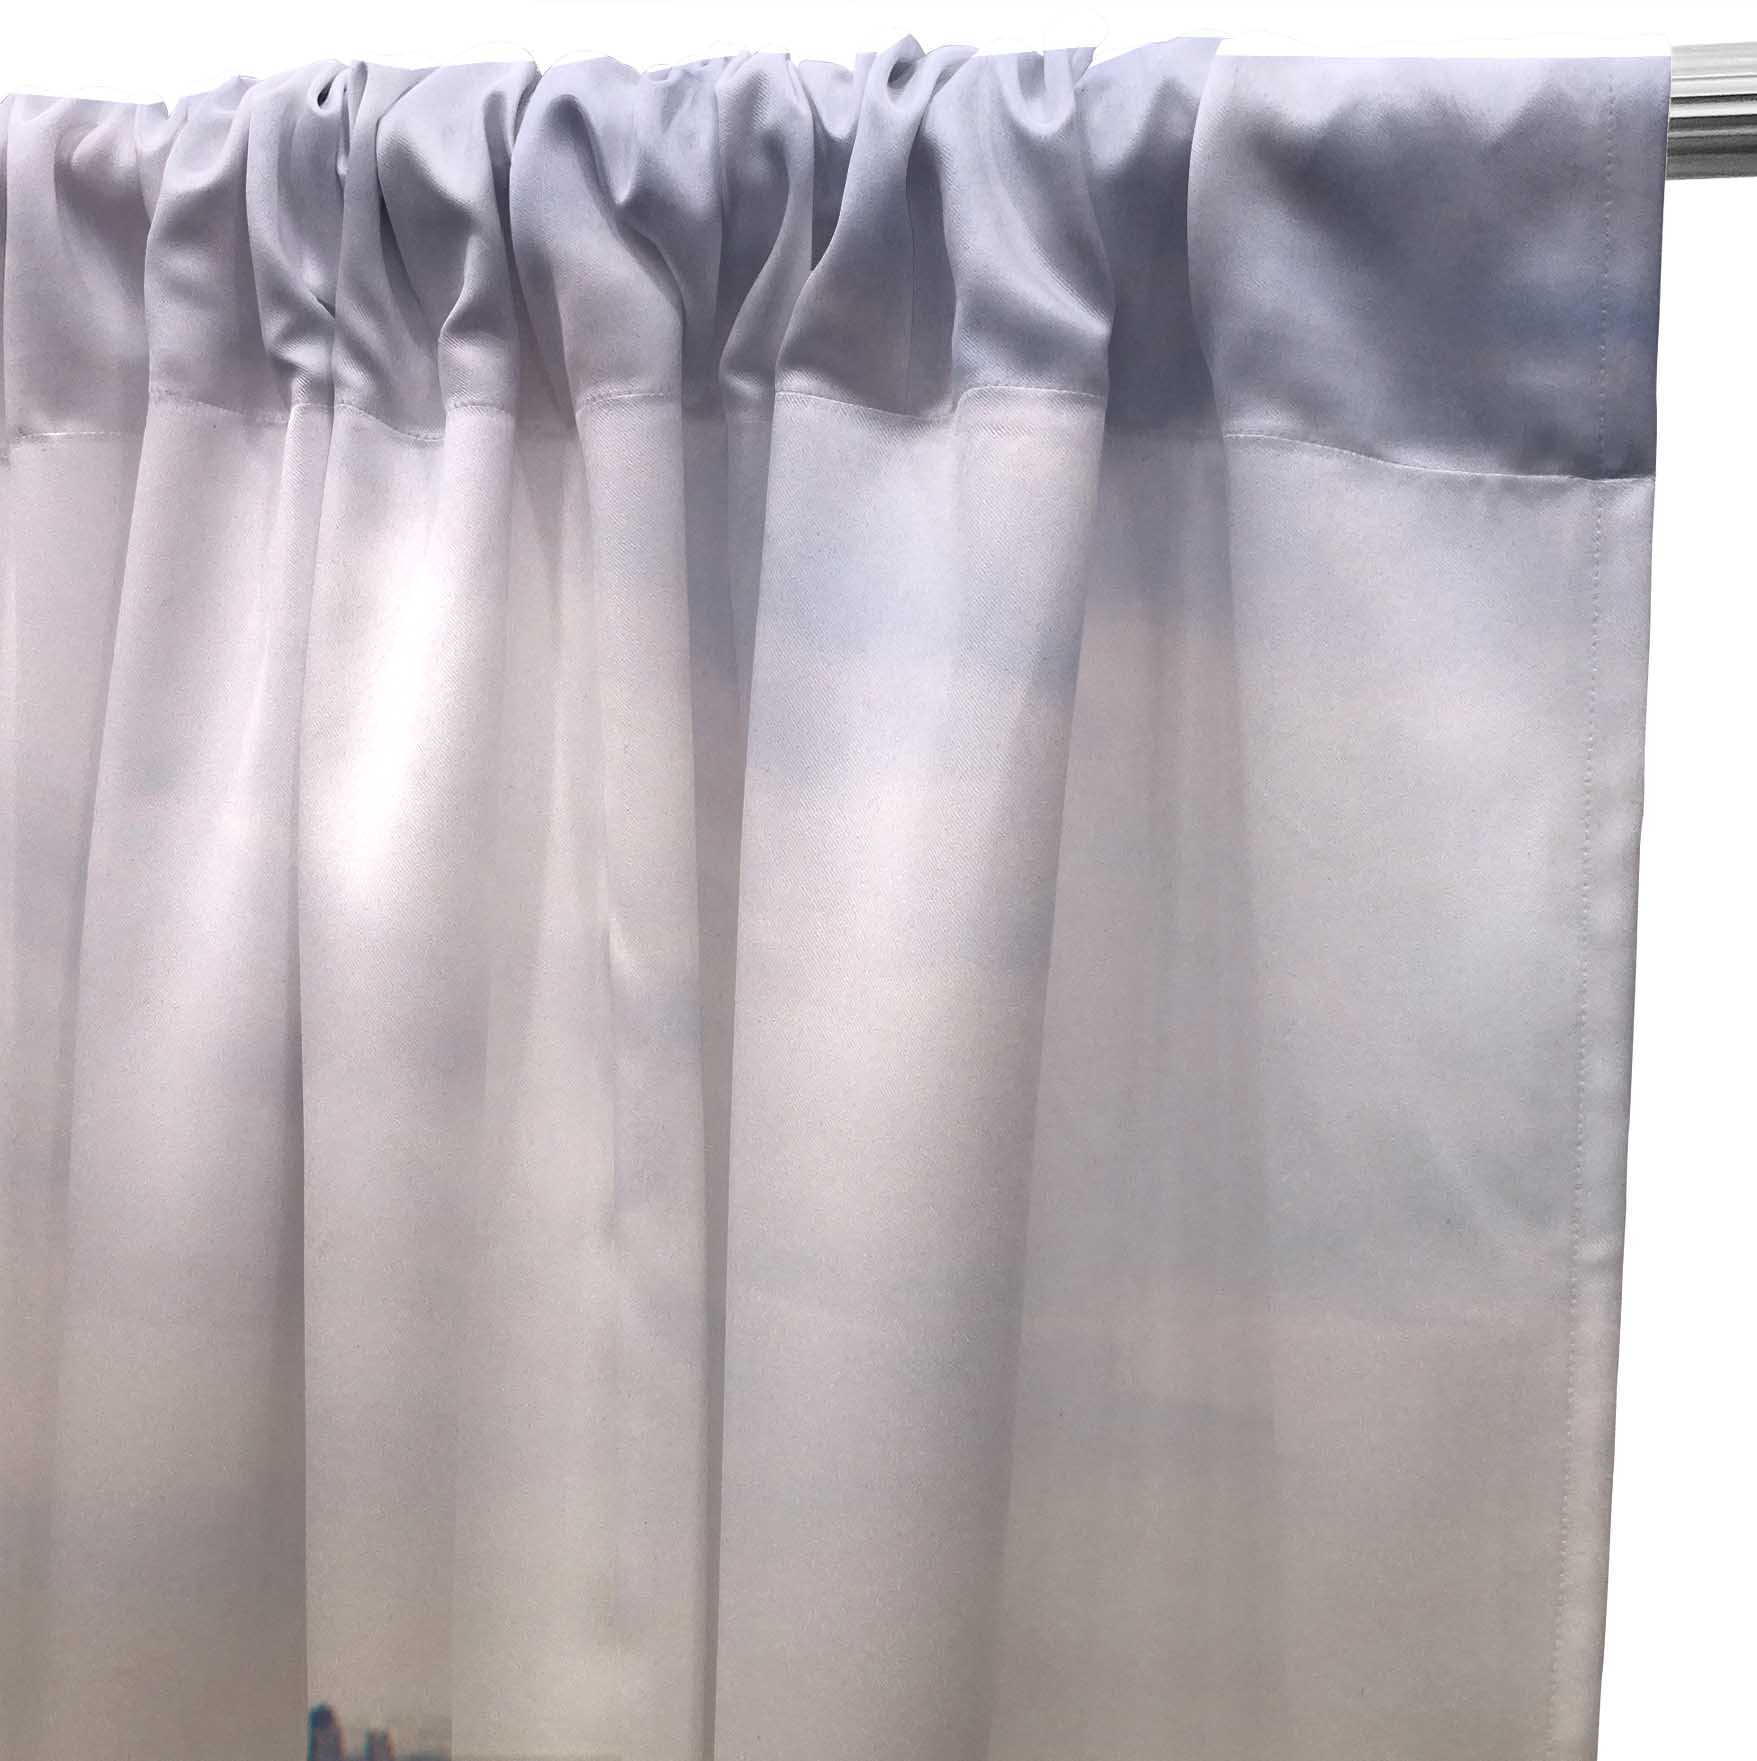 Window Curtain For Bedroom Rod Pocket Door Curtain Drapes 2 Panel-DCTI366A Wyprzedaż popularna